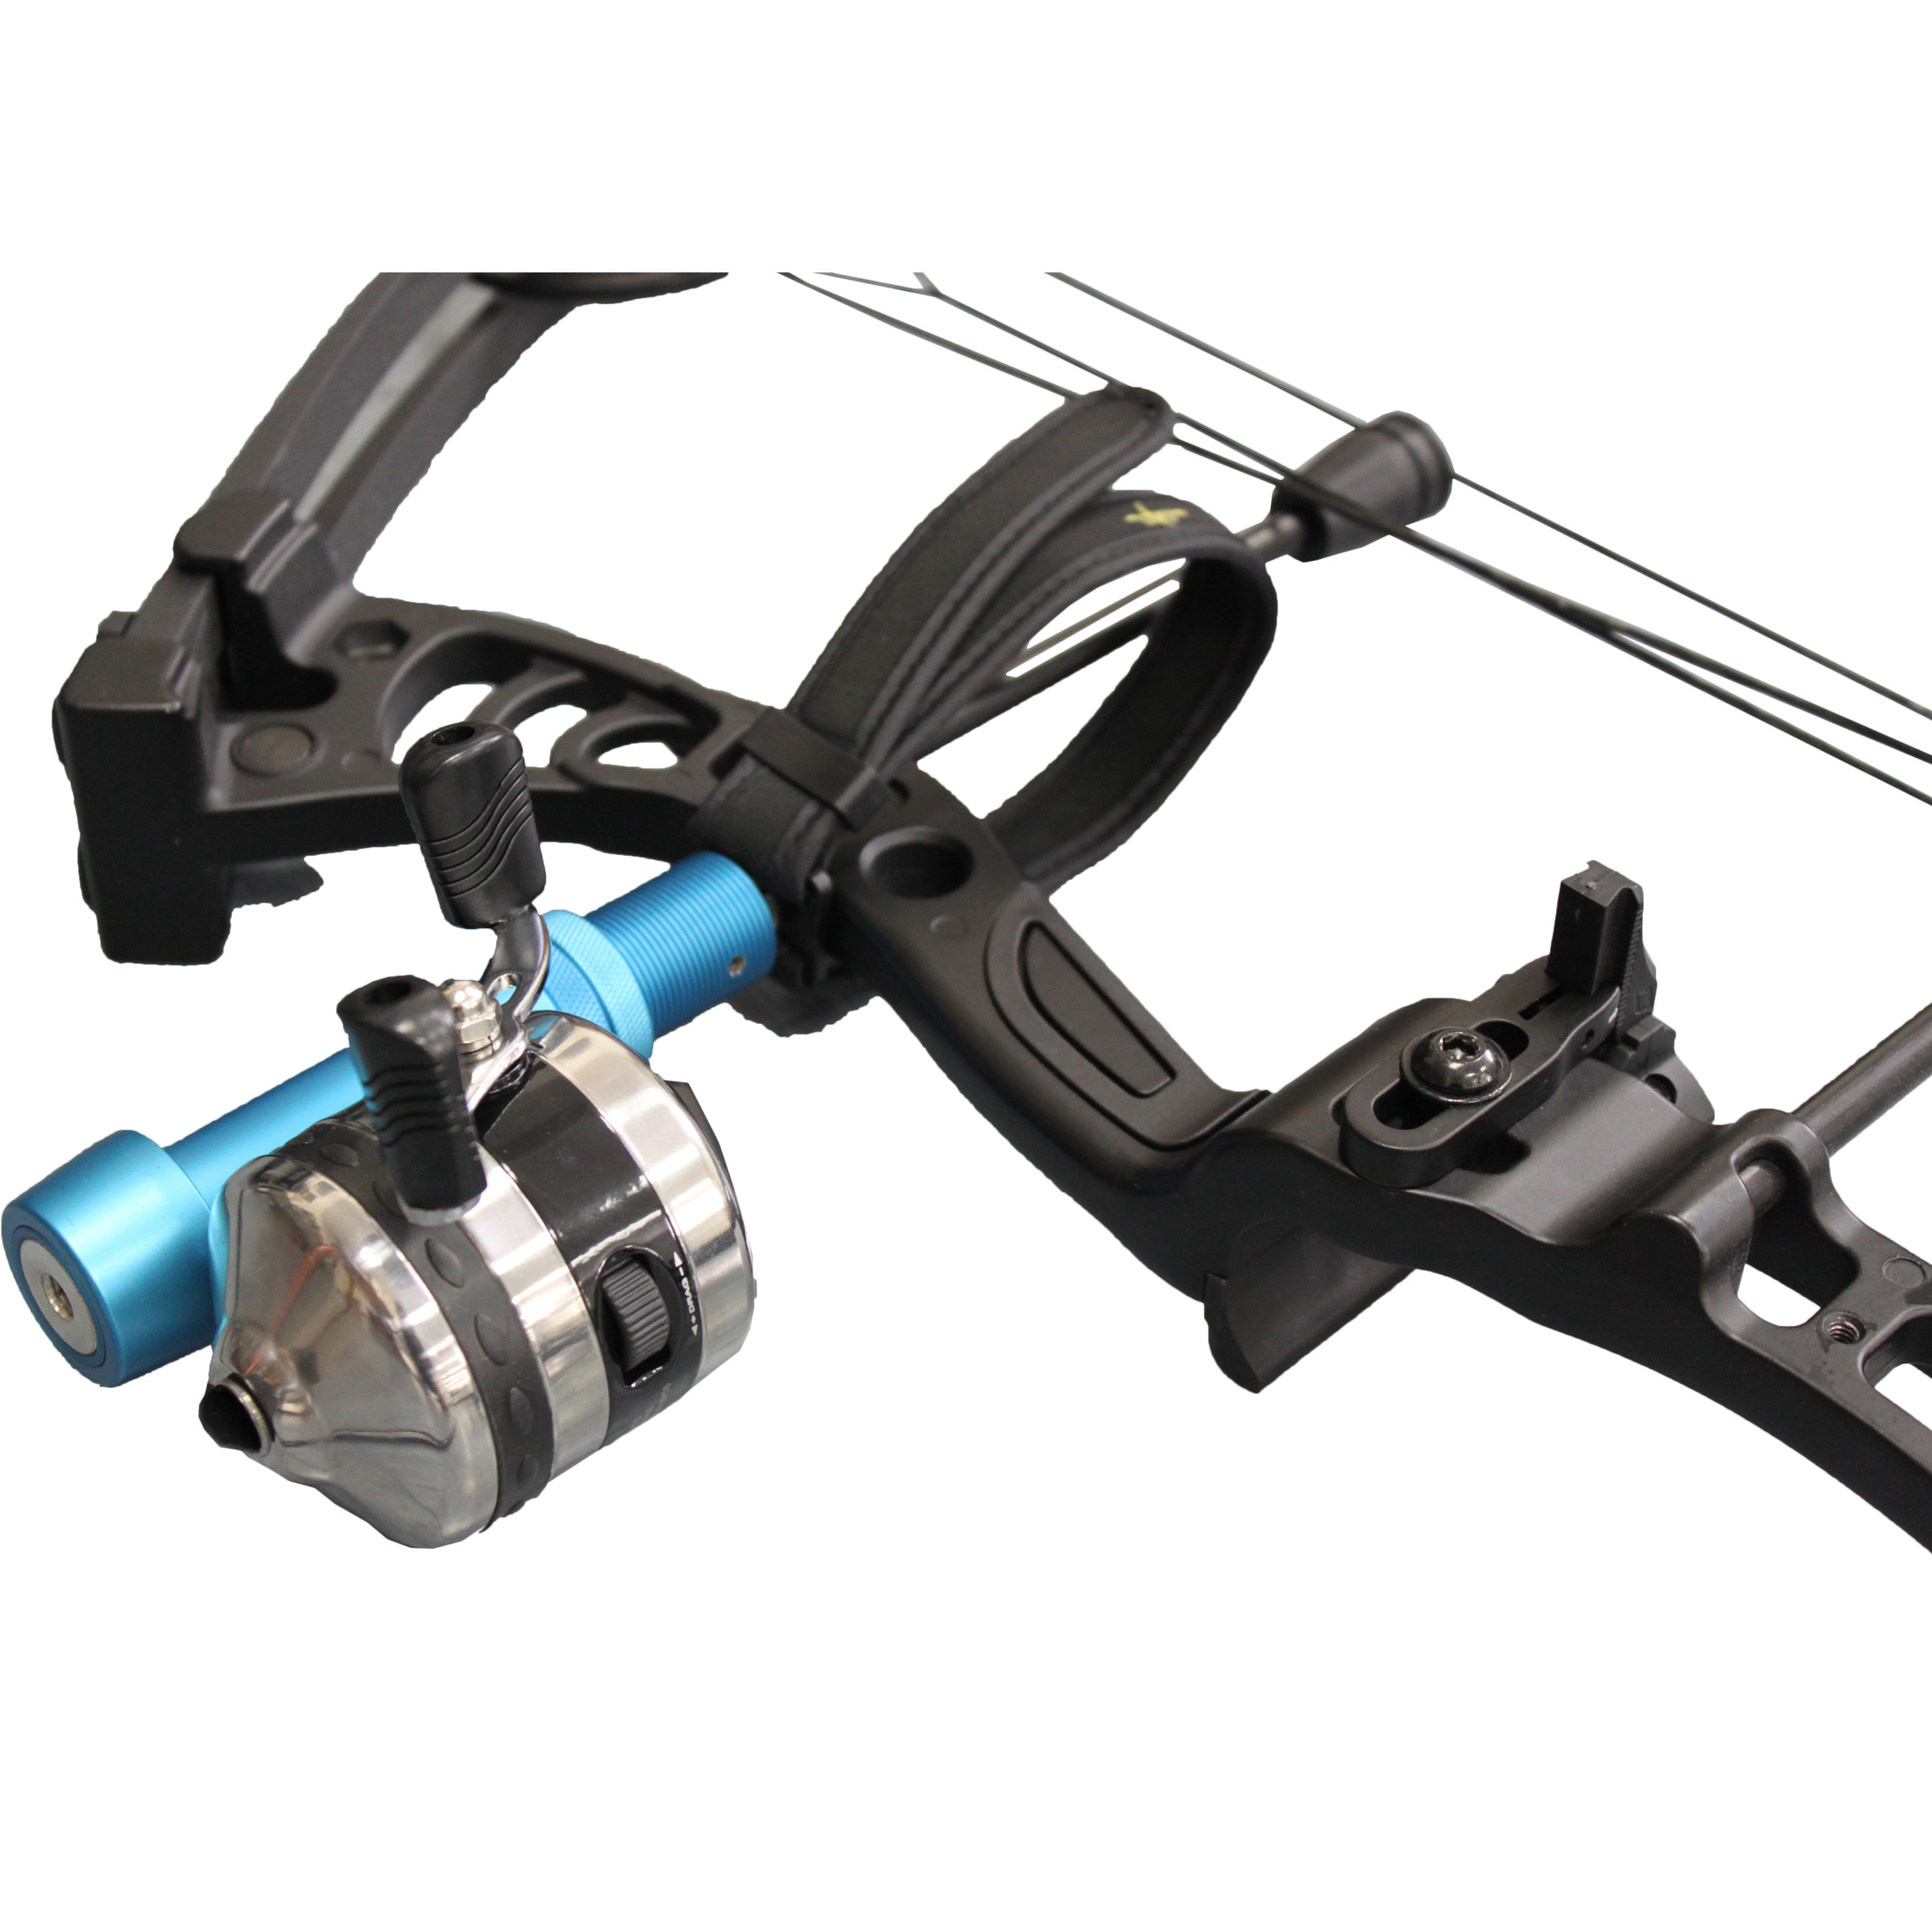 SAS Scorpii Compound Bowfishing Bow Fishing Arrow Package Kit